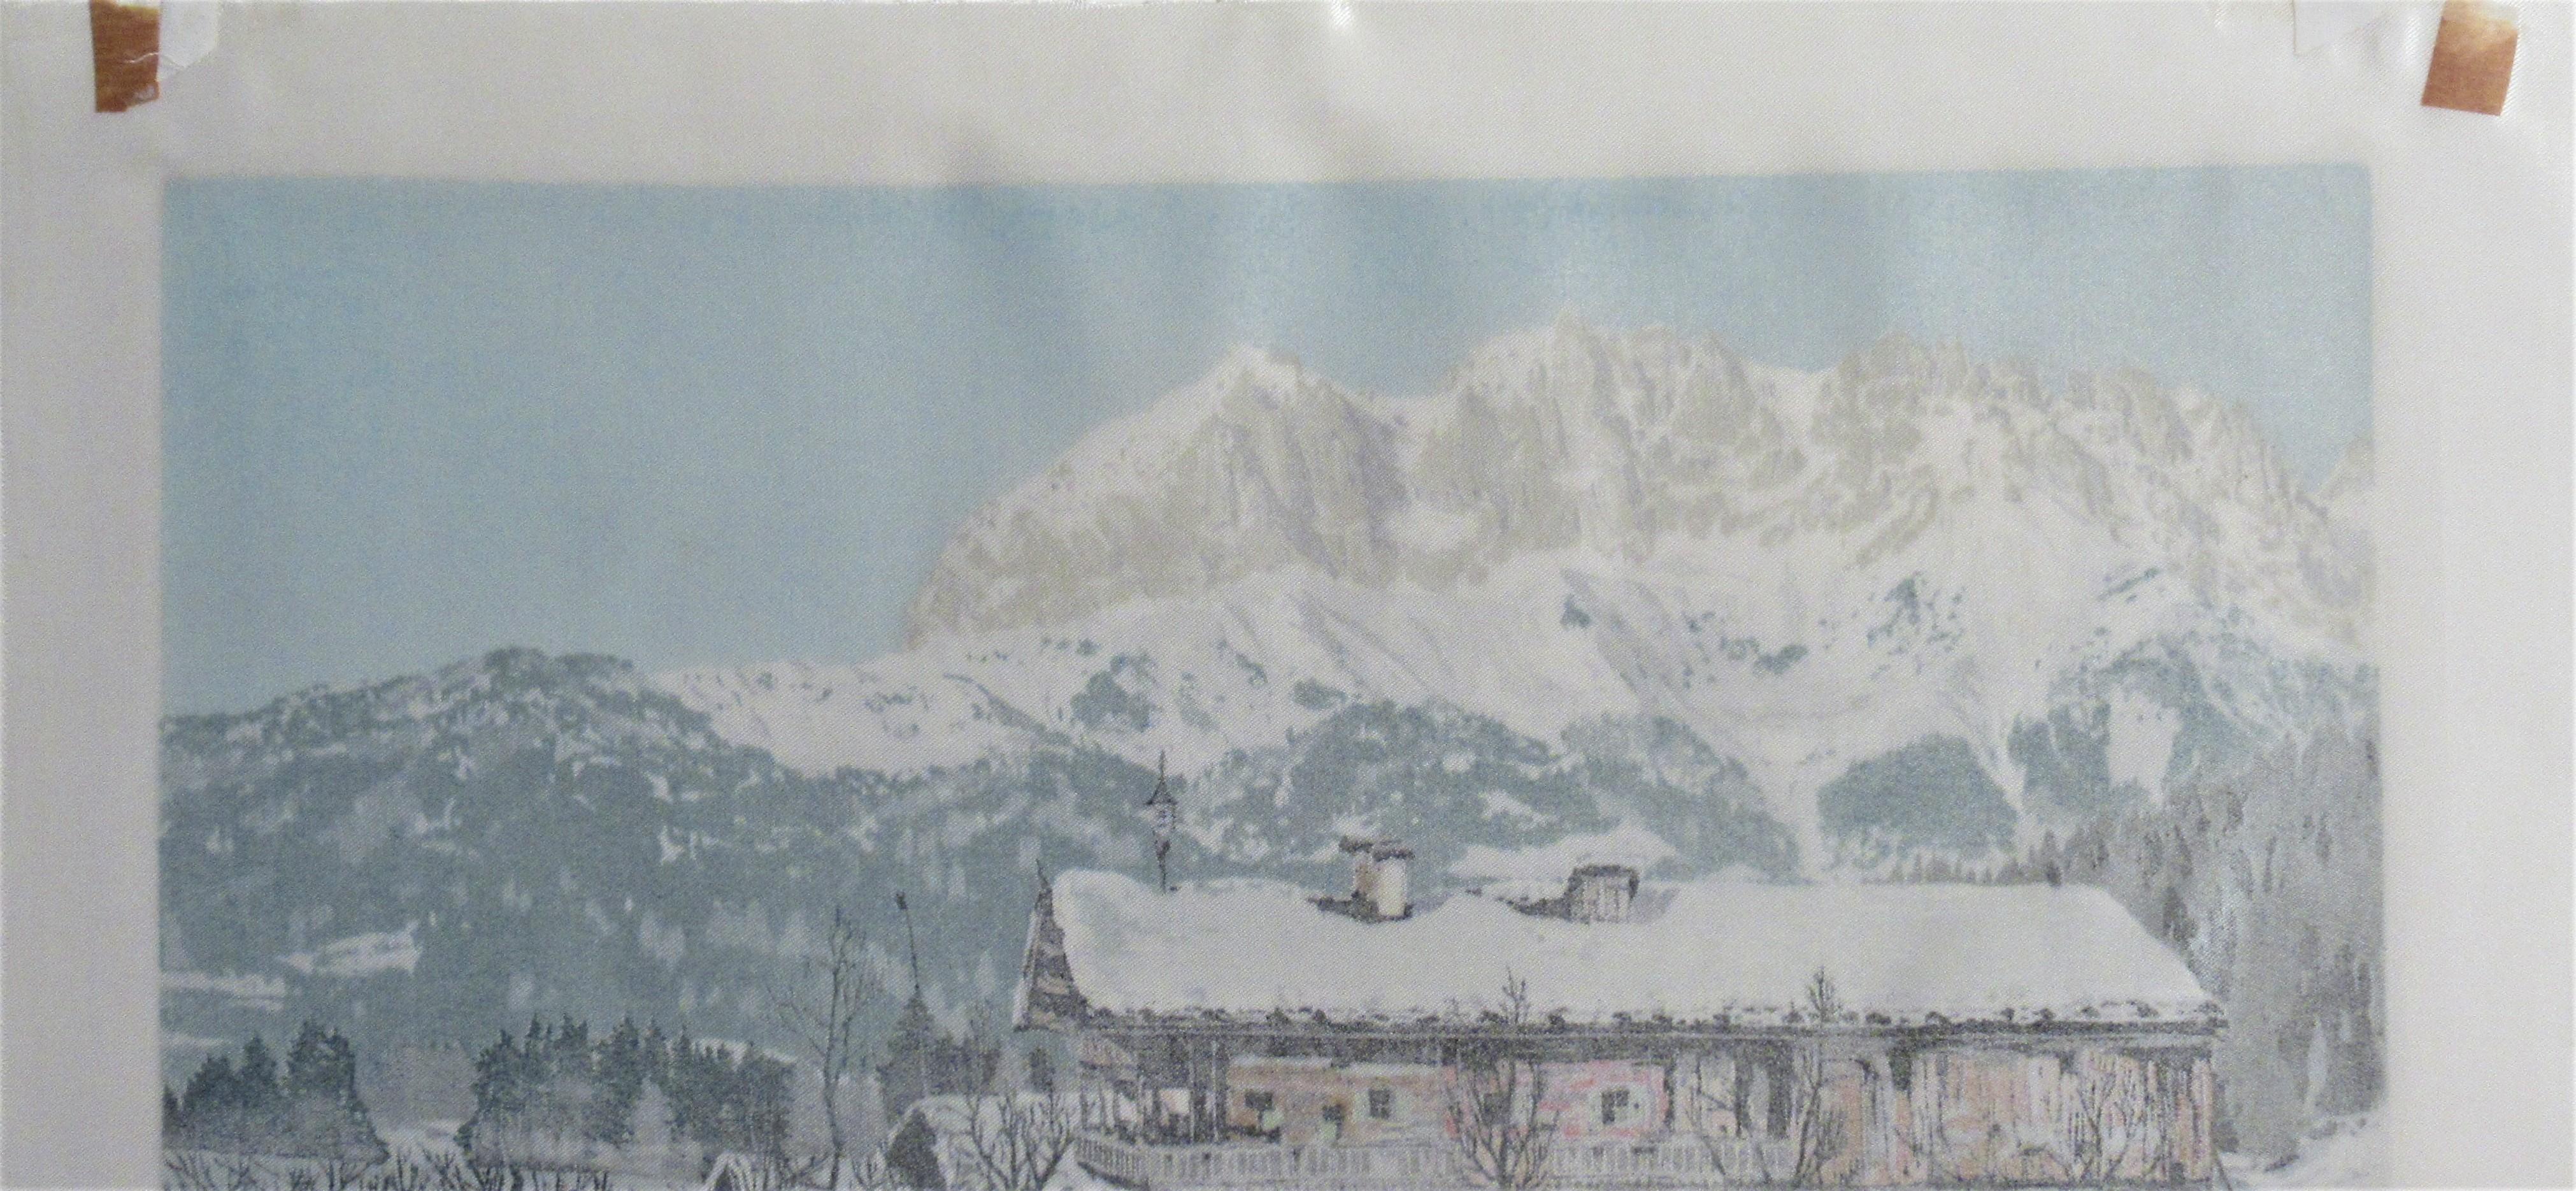 Peak of Wilder Kaiser, Kitzbuhelhom, Tyrol Alps - Gray Landscape Print by Hans Figura